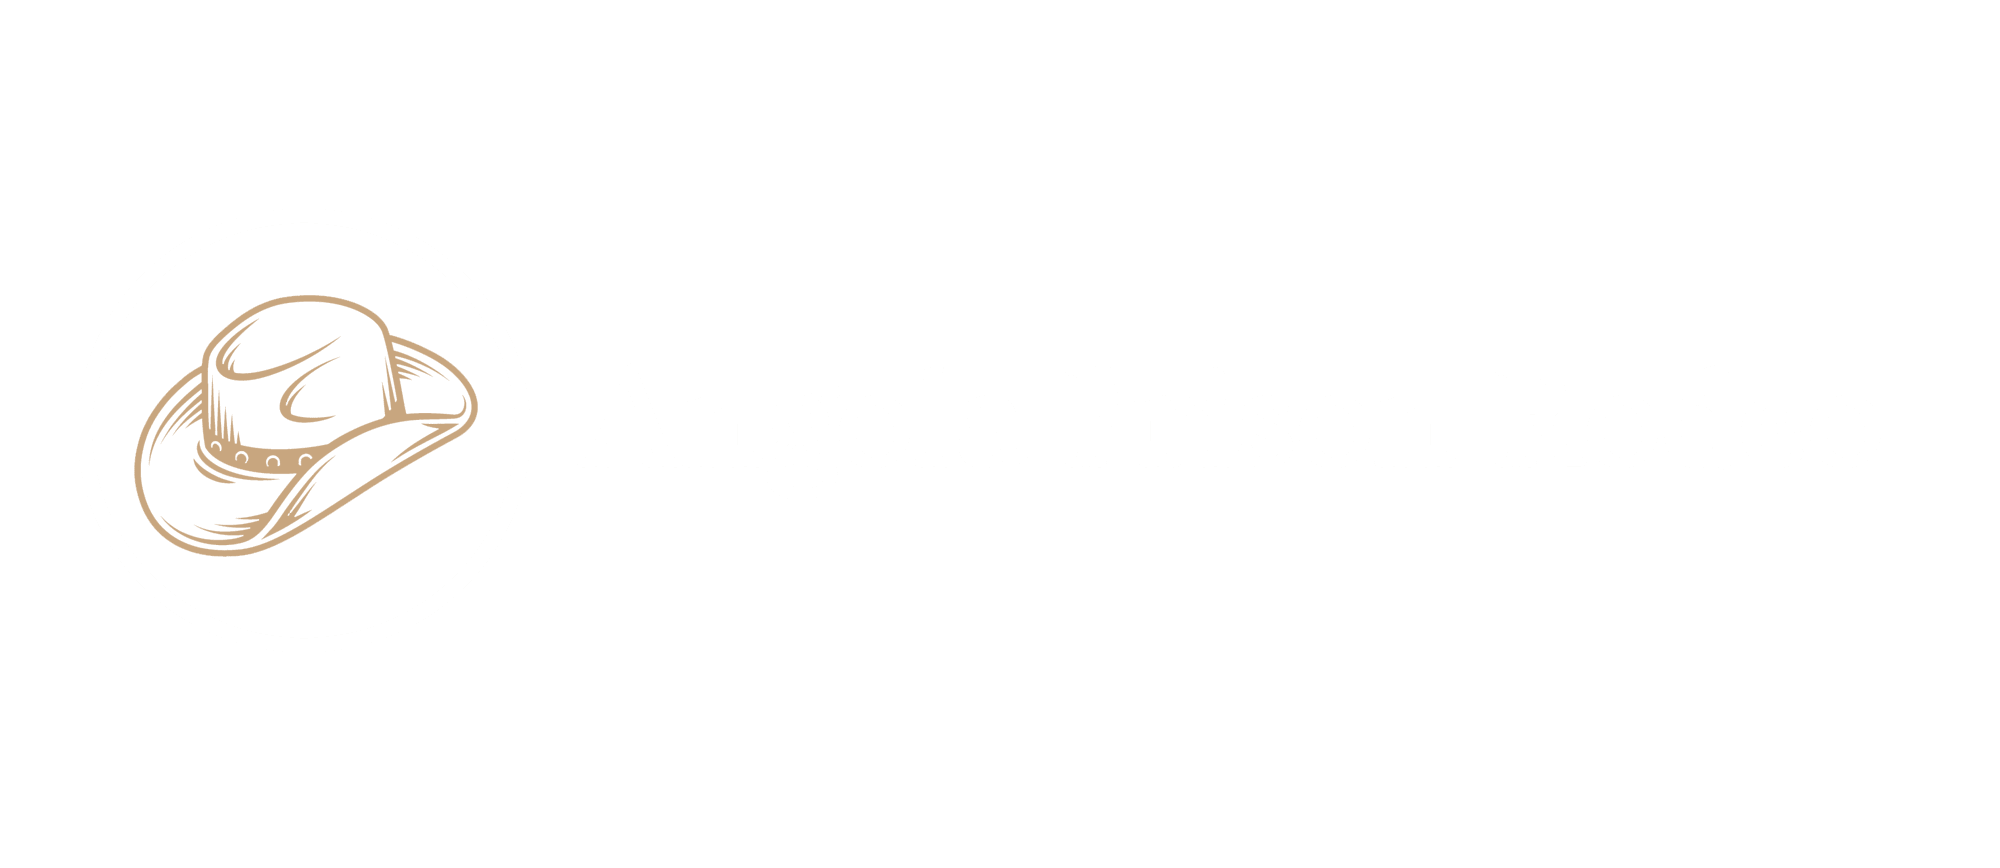 Angola Prison Rodeo